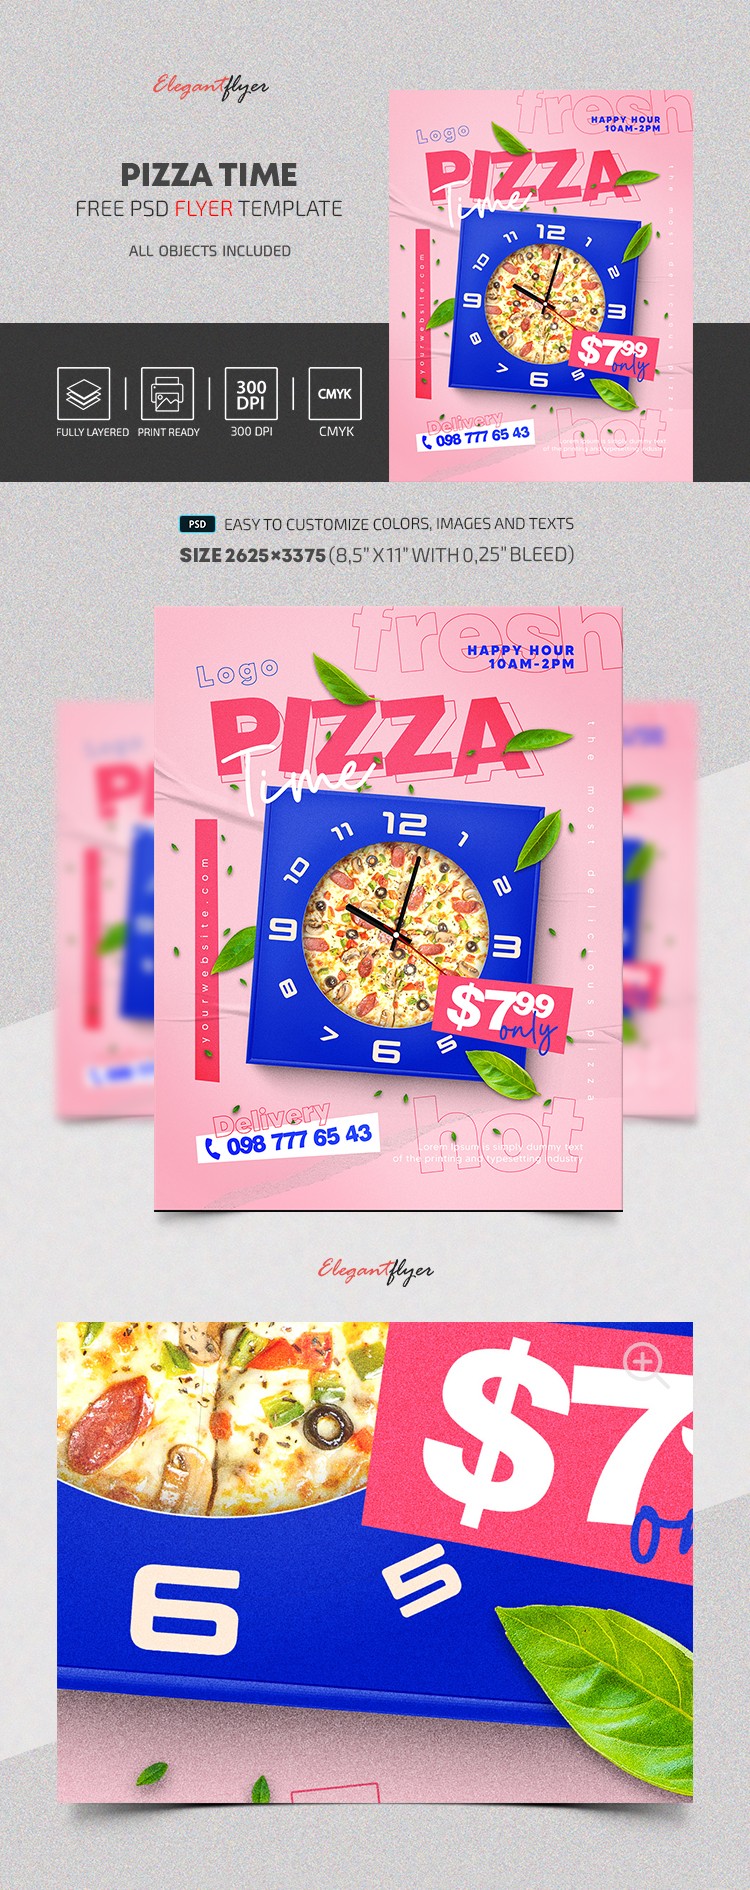 Pizza Time Flyer by ElegantFlyer